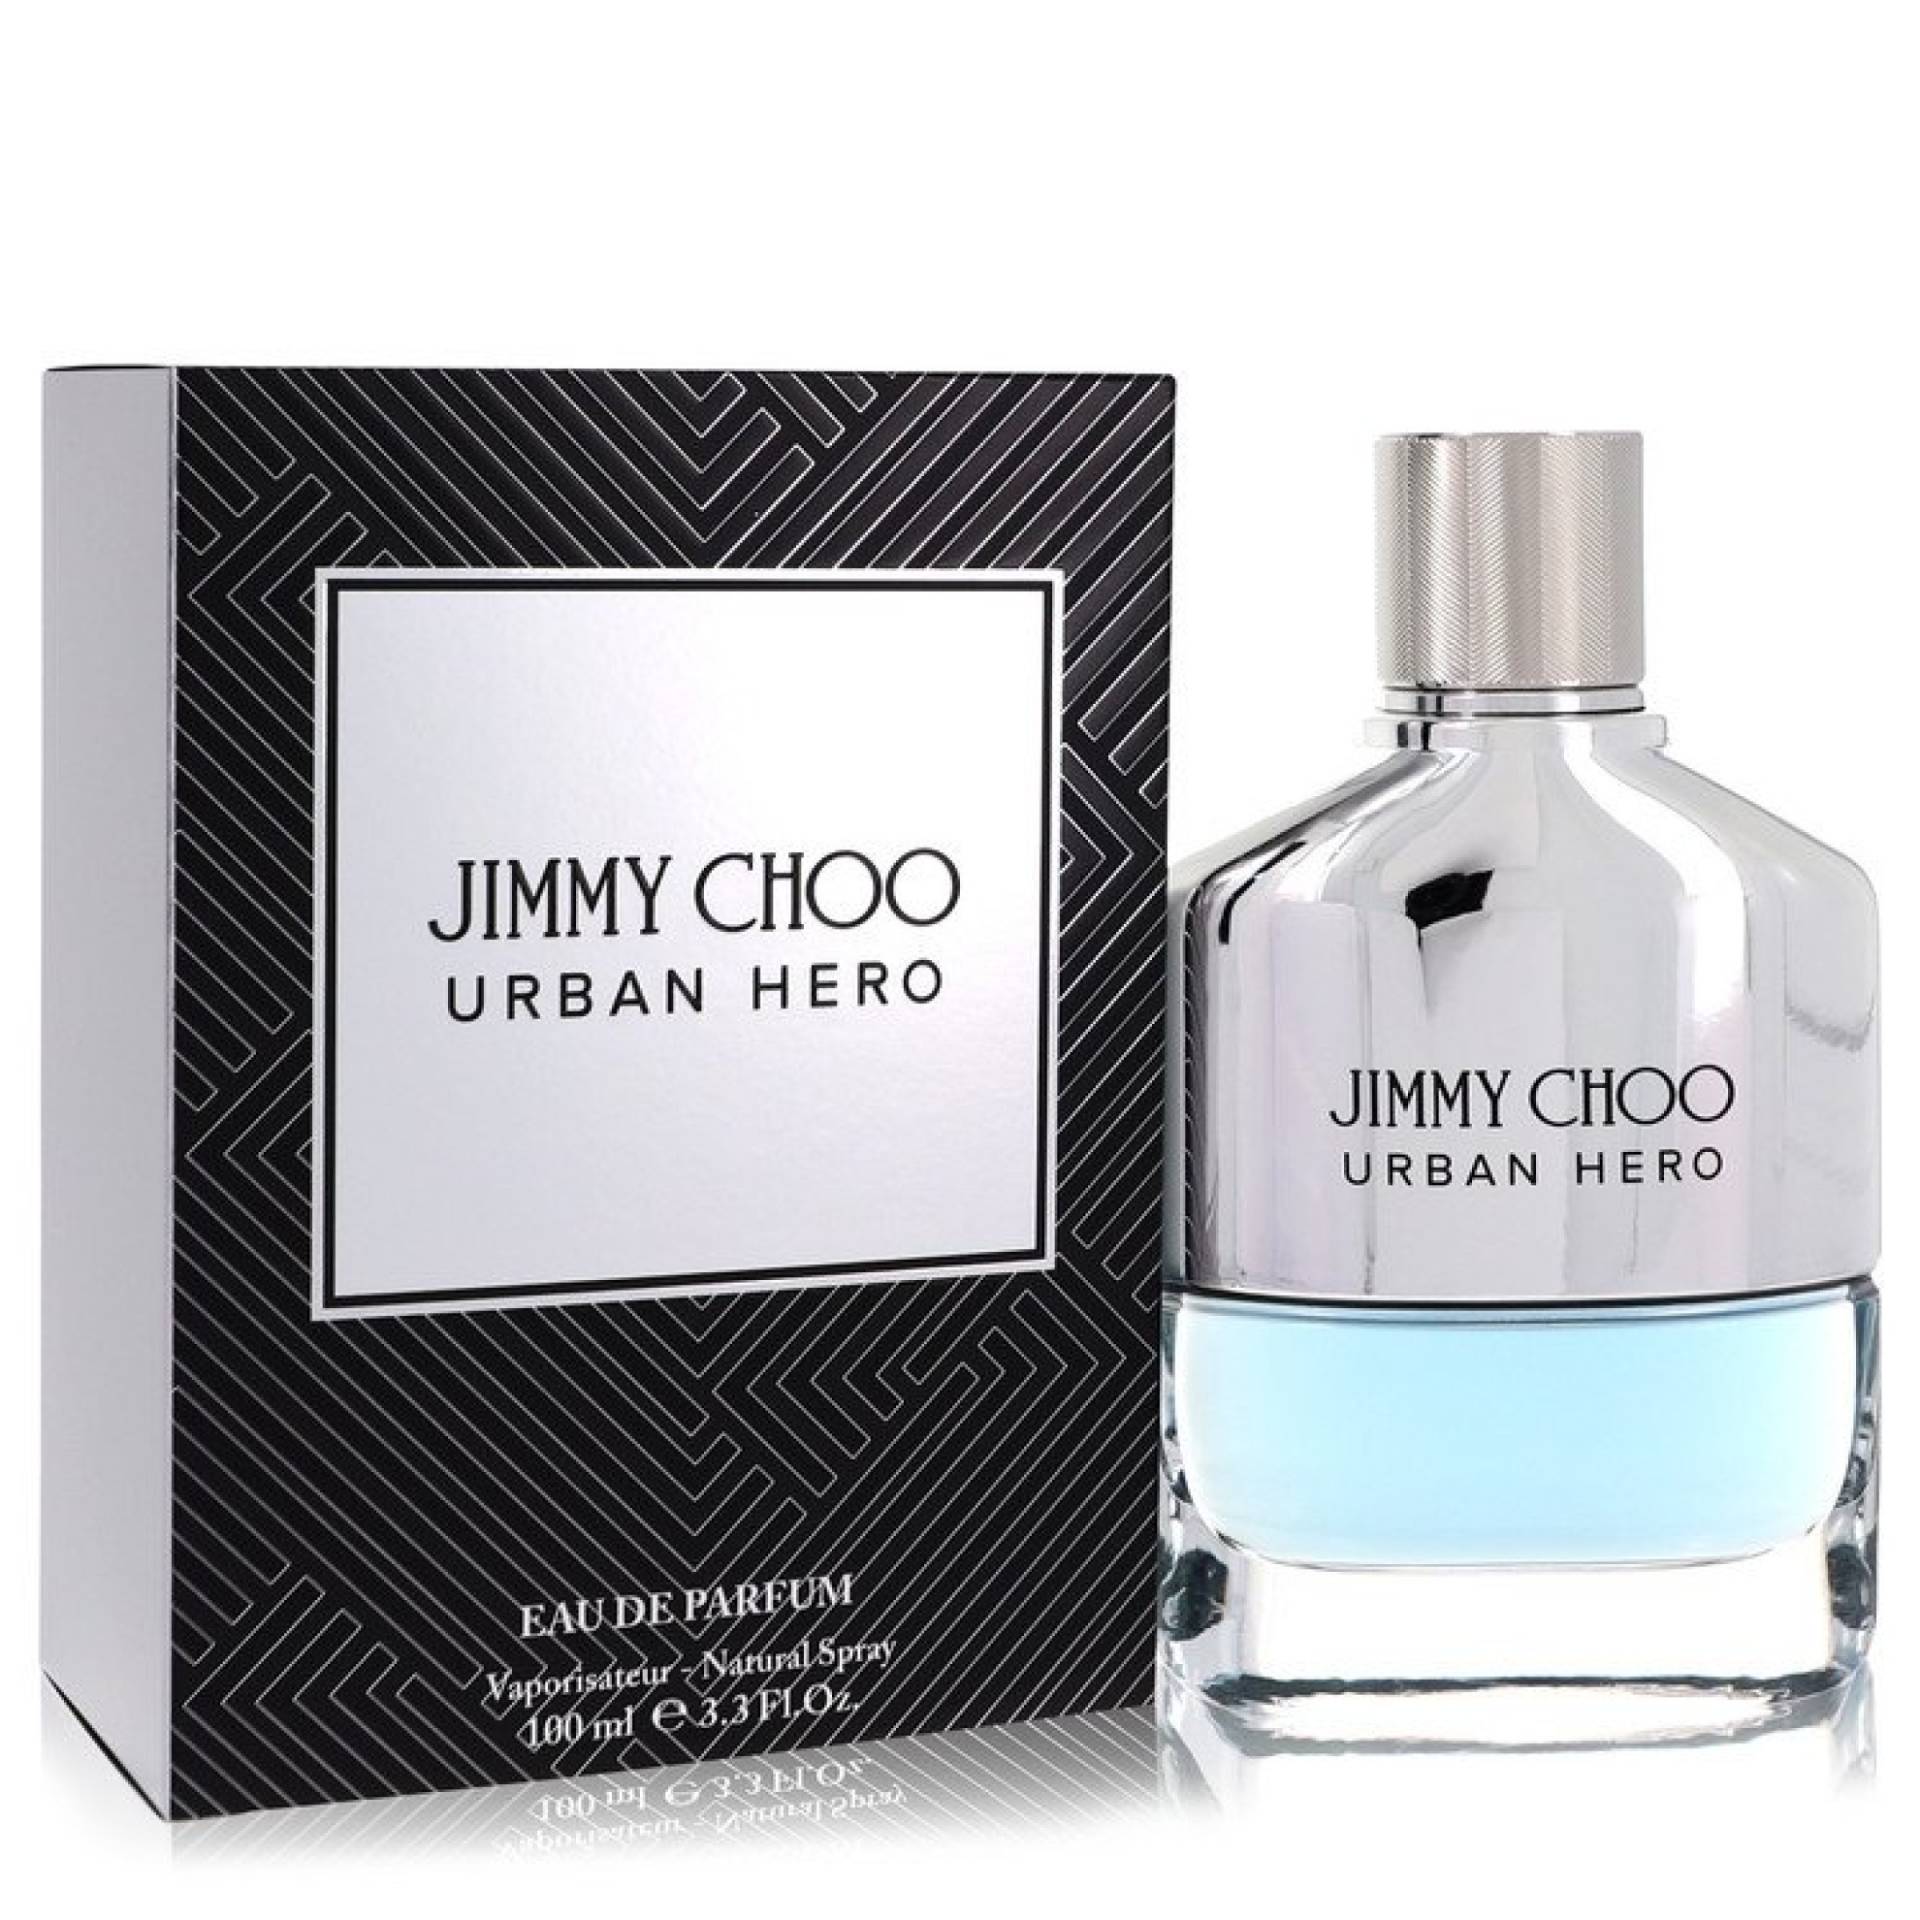 Jimmy Choo Urban Hero Eau De Parfum Spray 100 ml von Jimmy Choo